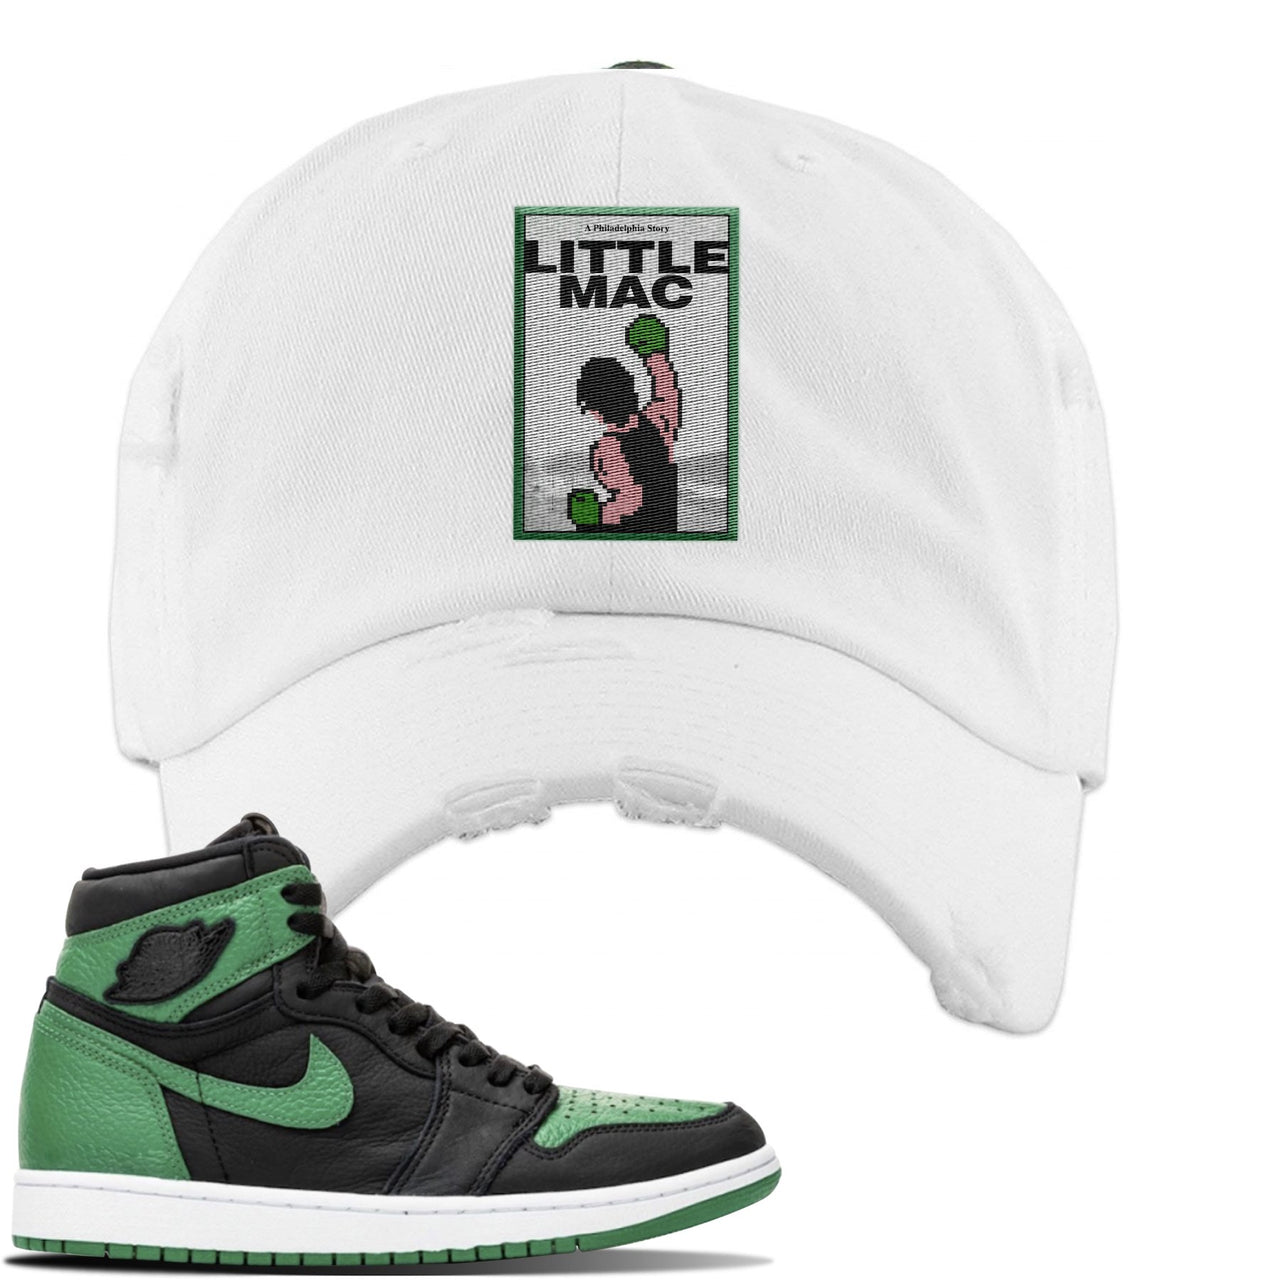 Jordan 1 Retro High OG Pine Green Gym Sneaker White Distressed Dad Hat | Hat to match Air Jordan 1 Retro High OG Pine Green Gym Shoes | Little Mac A Philly Story